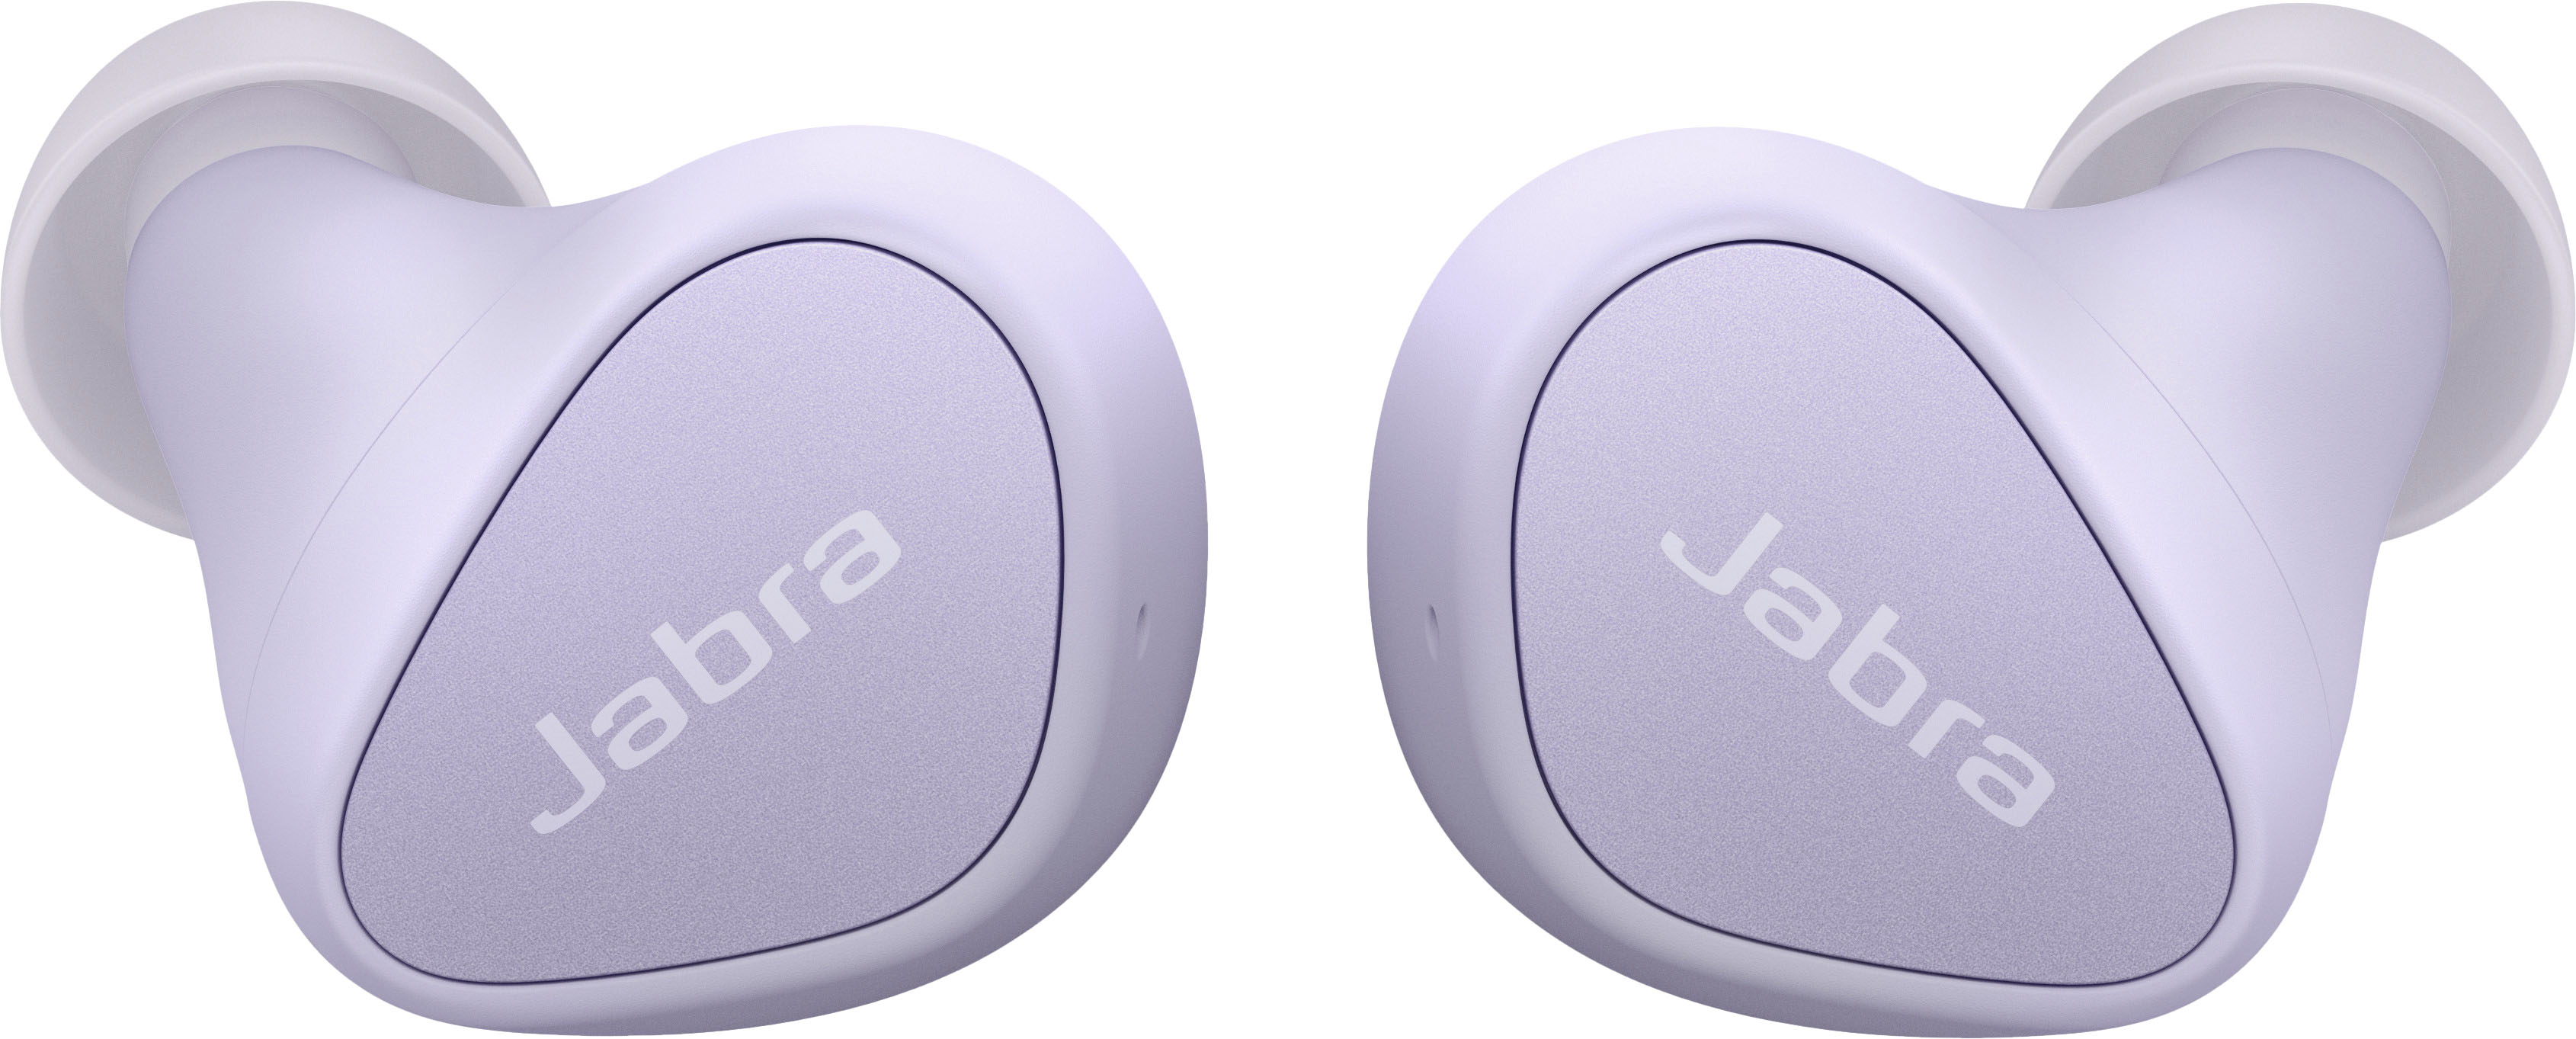 Jabra Elite 3 review: Super comfy, no-frills earbuds